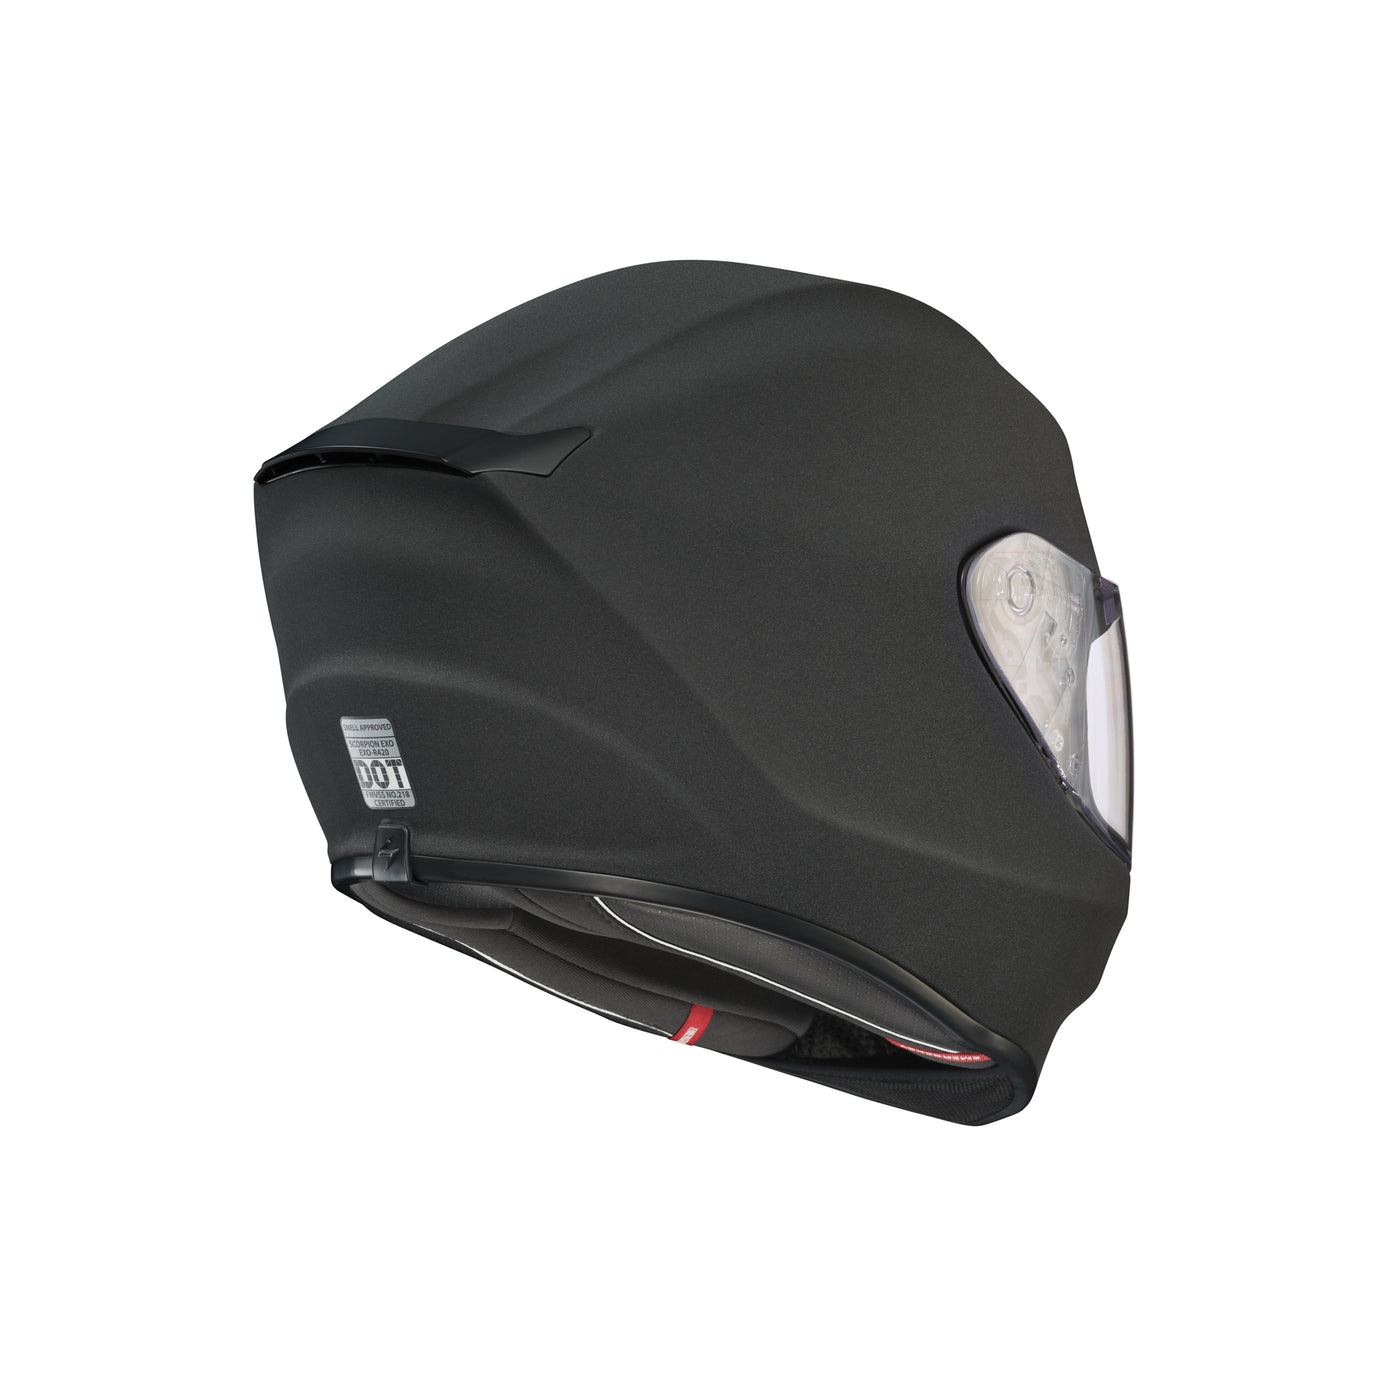 SCORPION EXO EXO-R420 Graphite Helmet